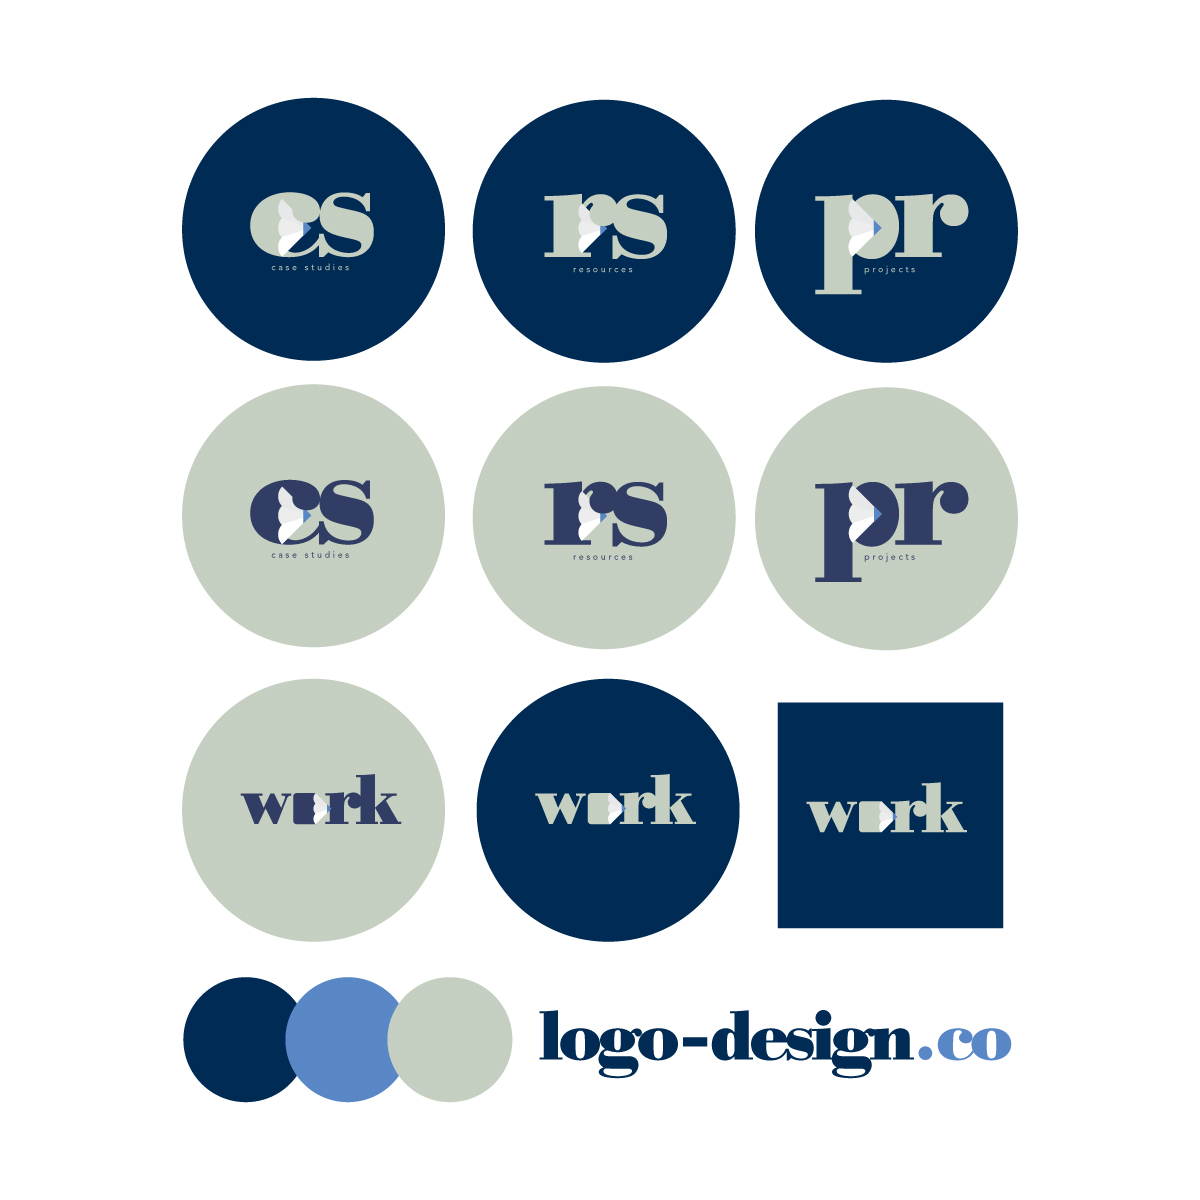 logo design co identity system elements